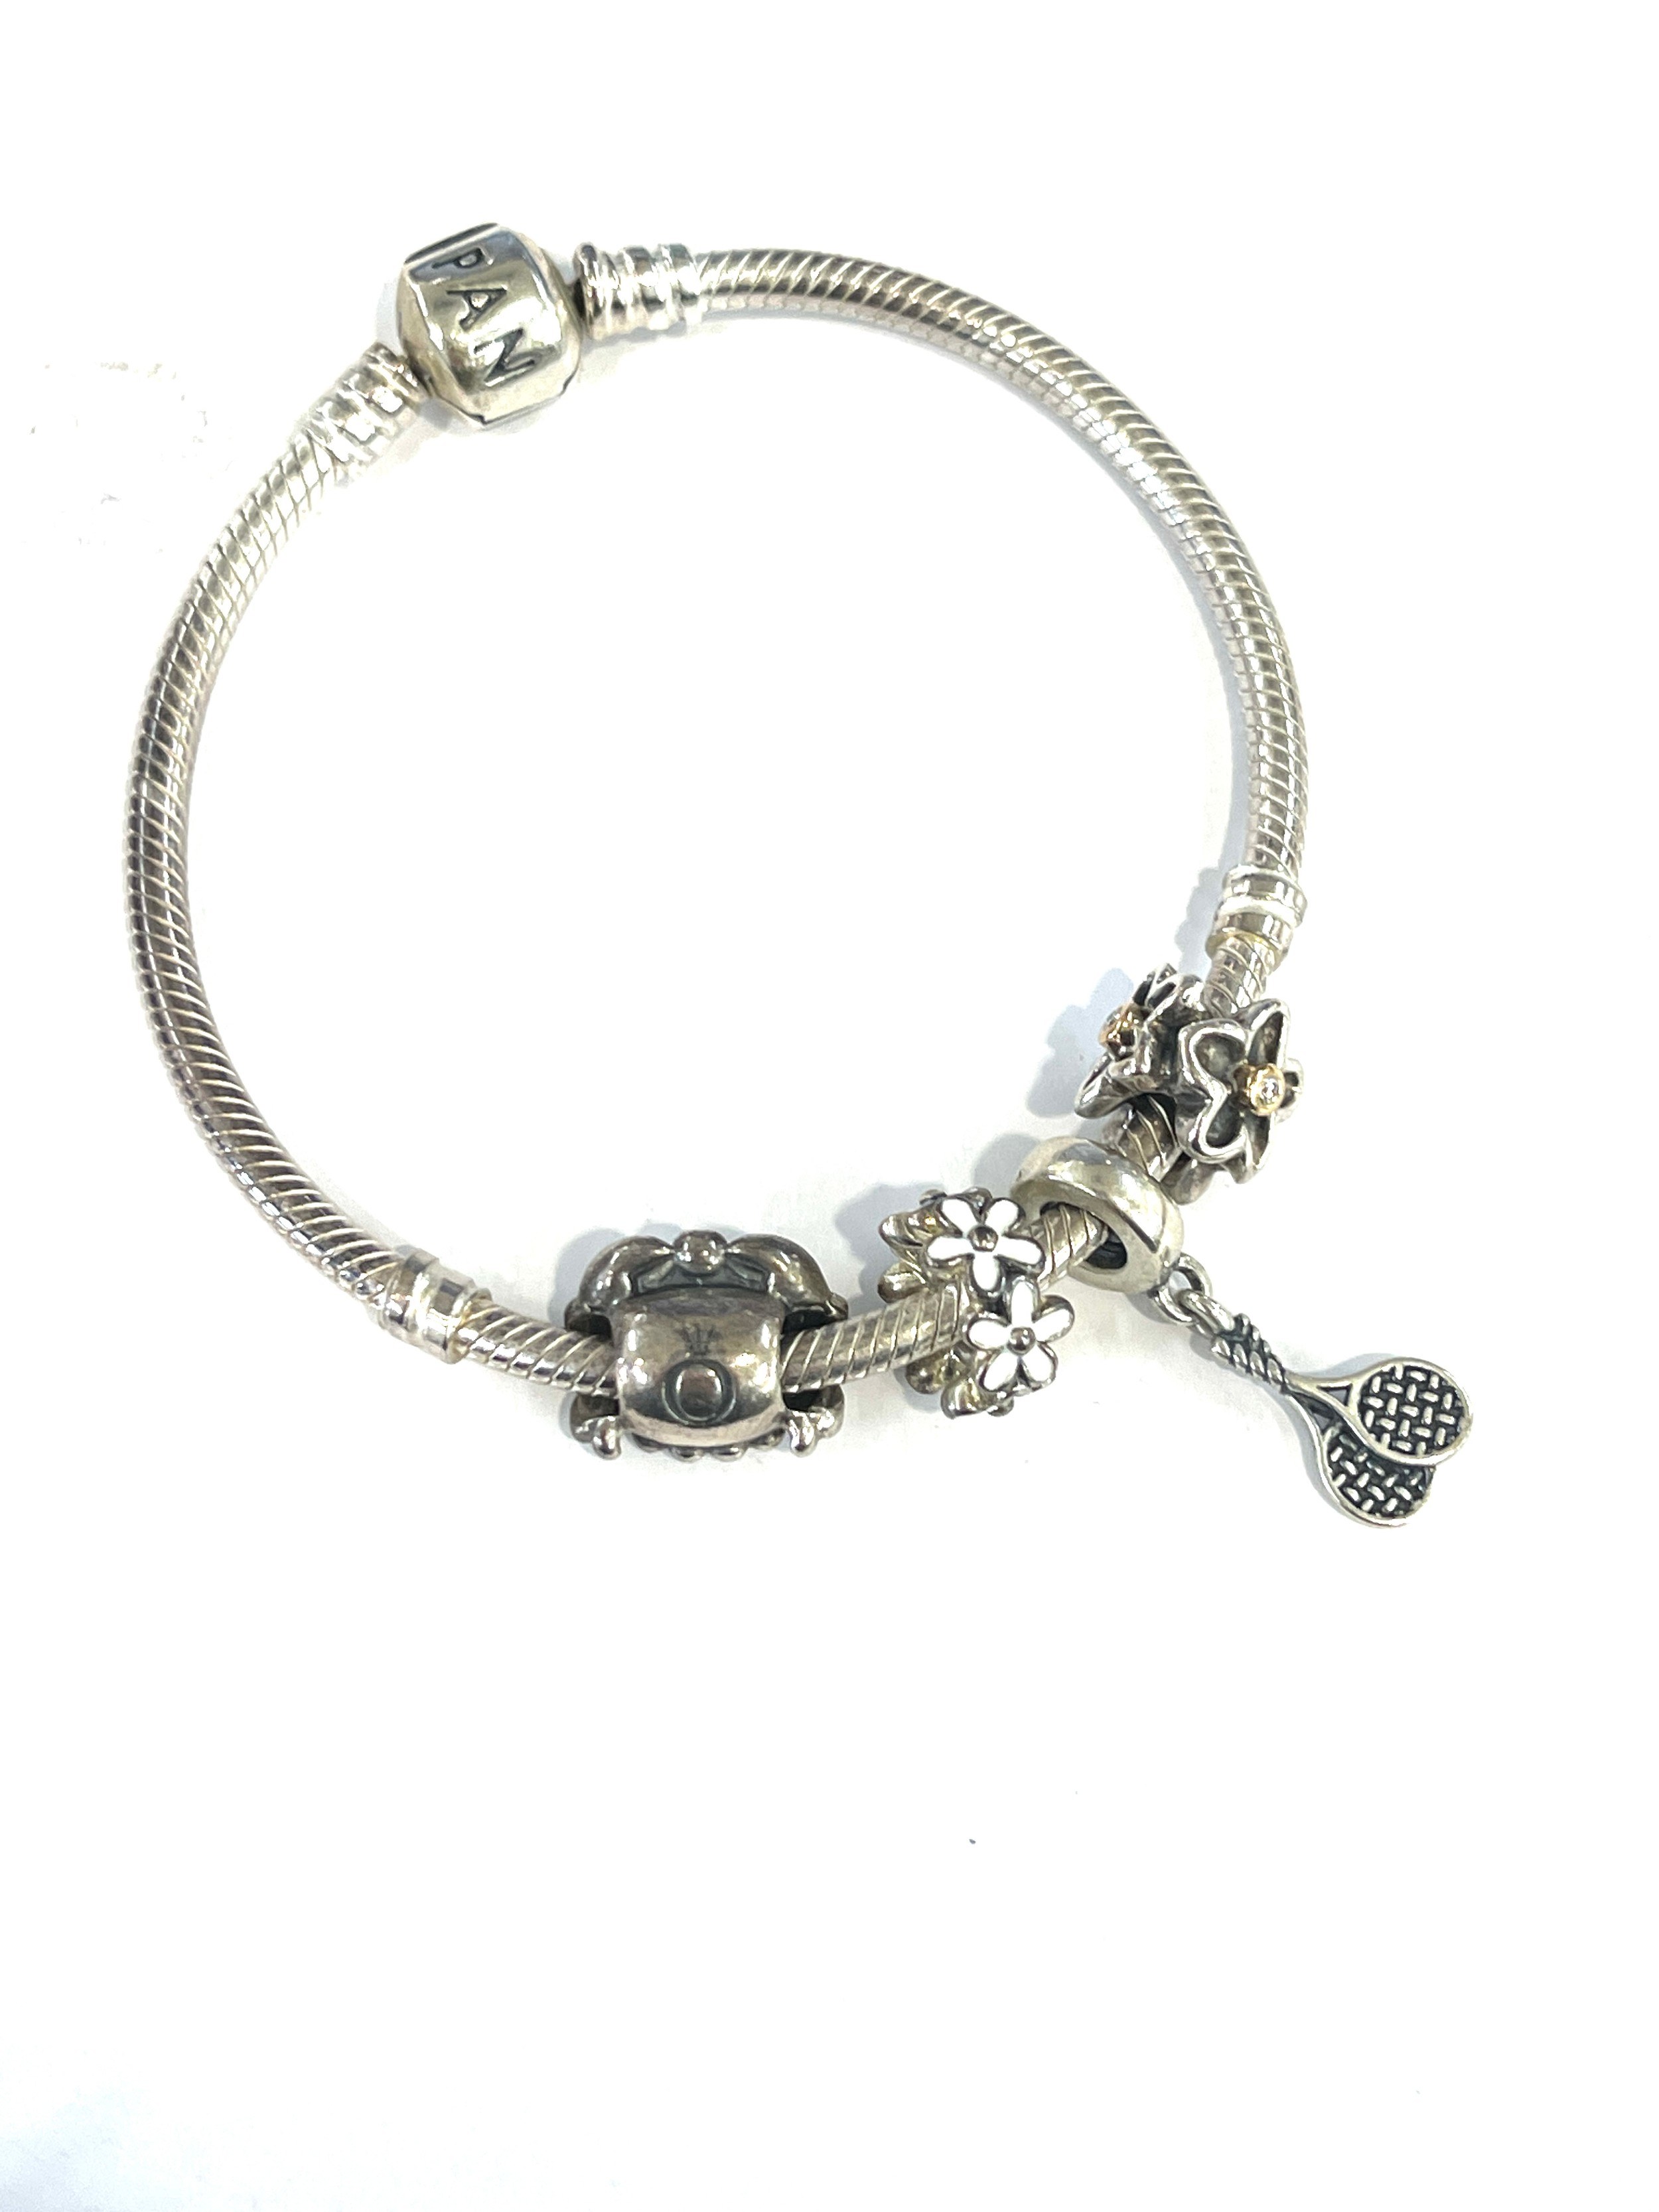 Pandora bracelet and 4 charms